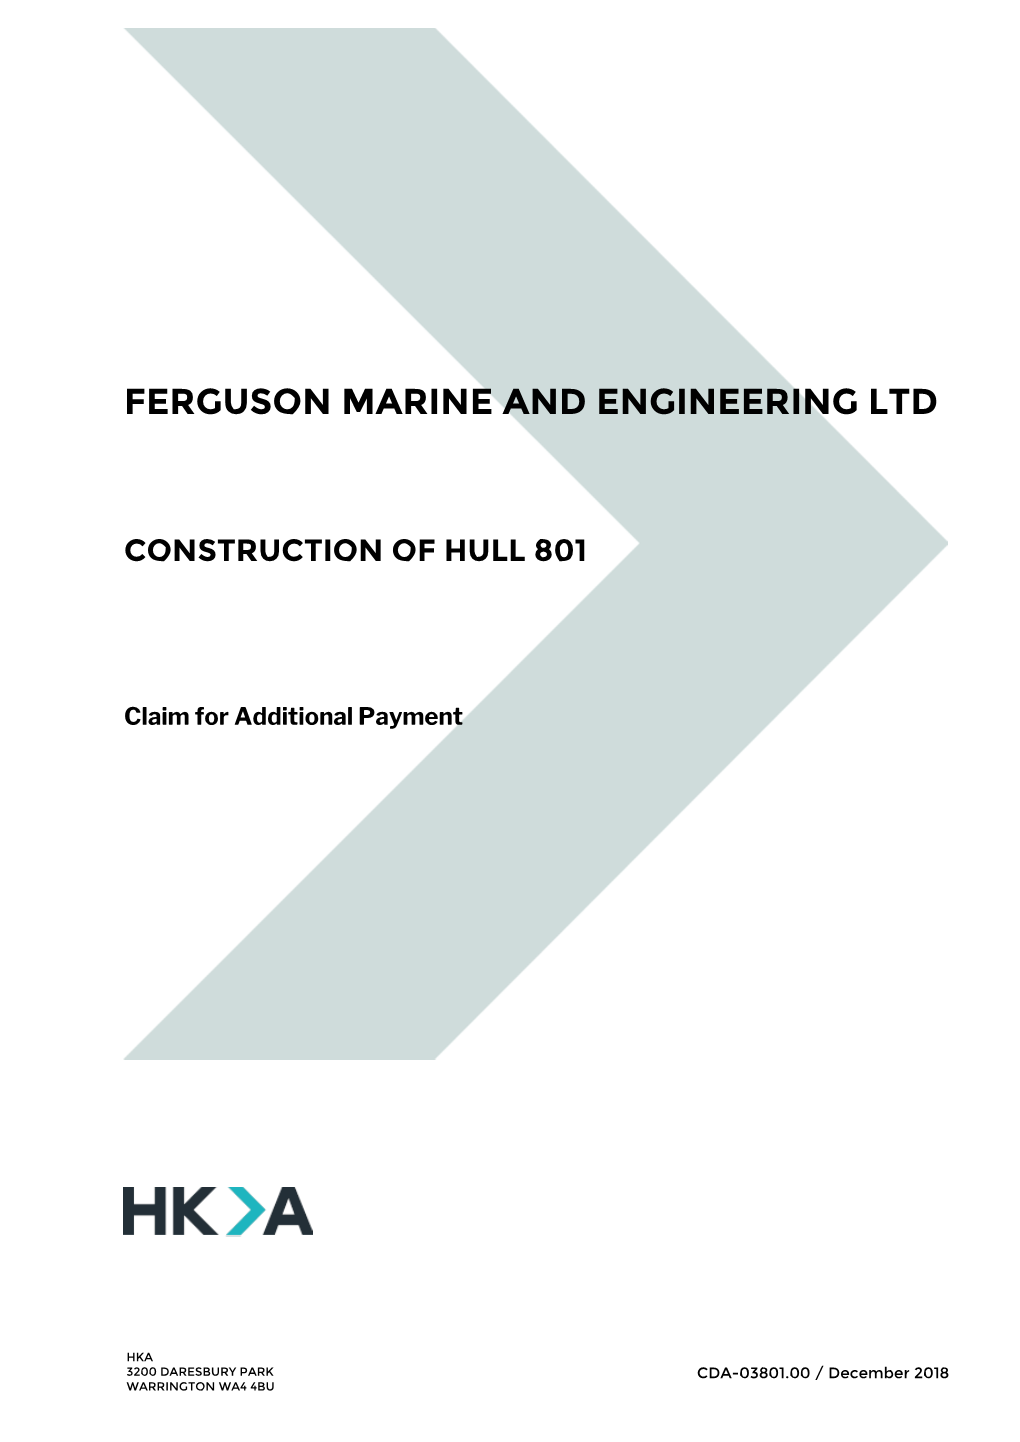 Ferguson Marine Engineering Limited of 1 Redwood Crescent, Peel Park, East Kilbride, G47 5PA (“FMEL”)